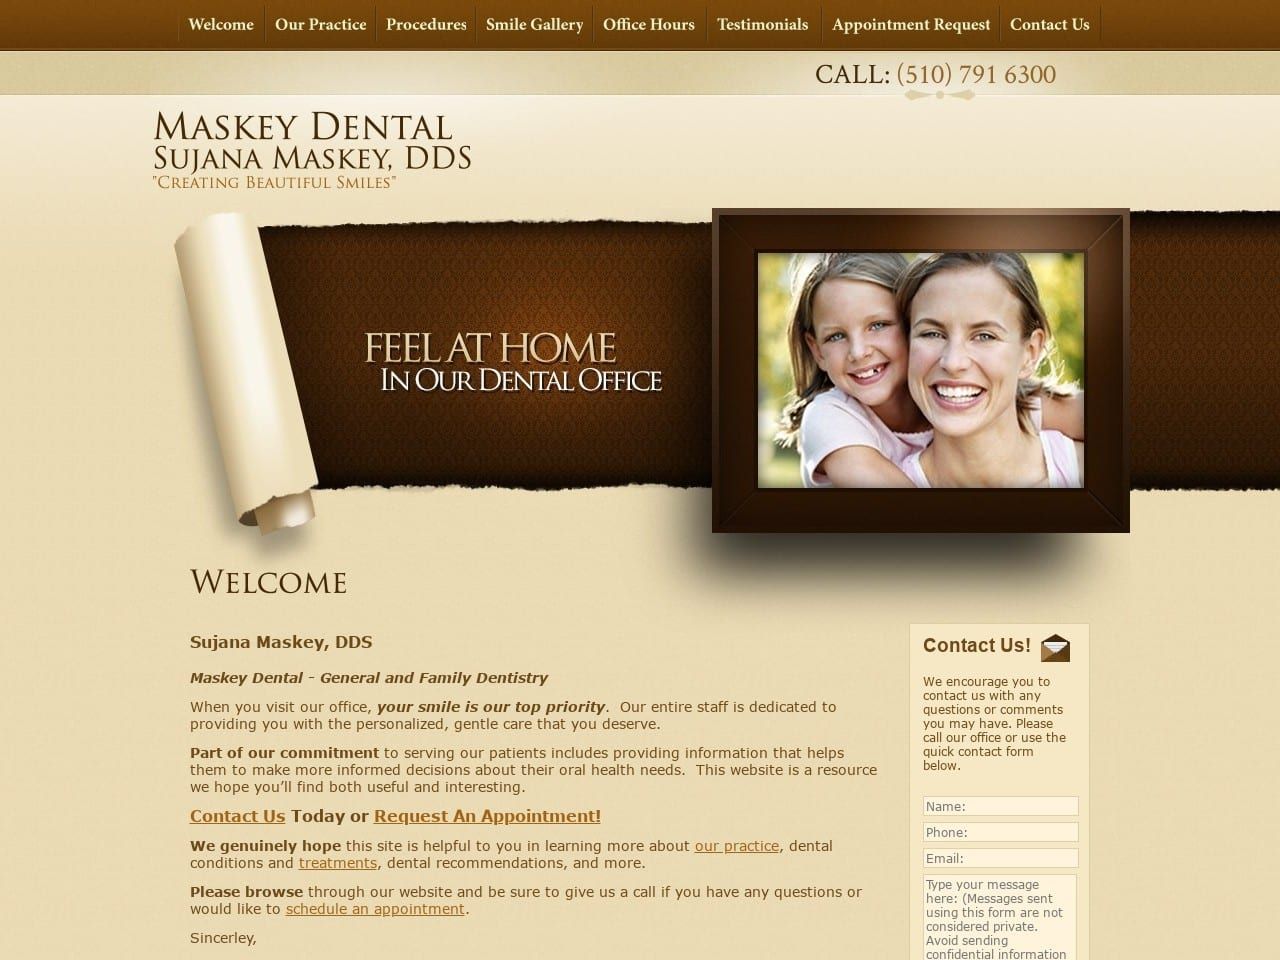 Maskey Dental Website Screenshot from maskeydental.com